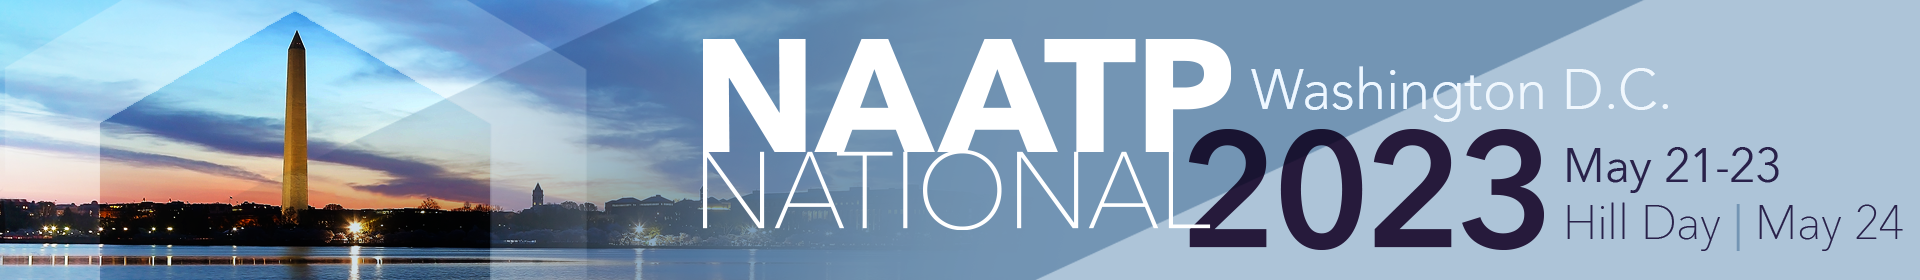 NAATP National 2023 Event Banner